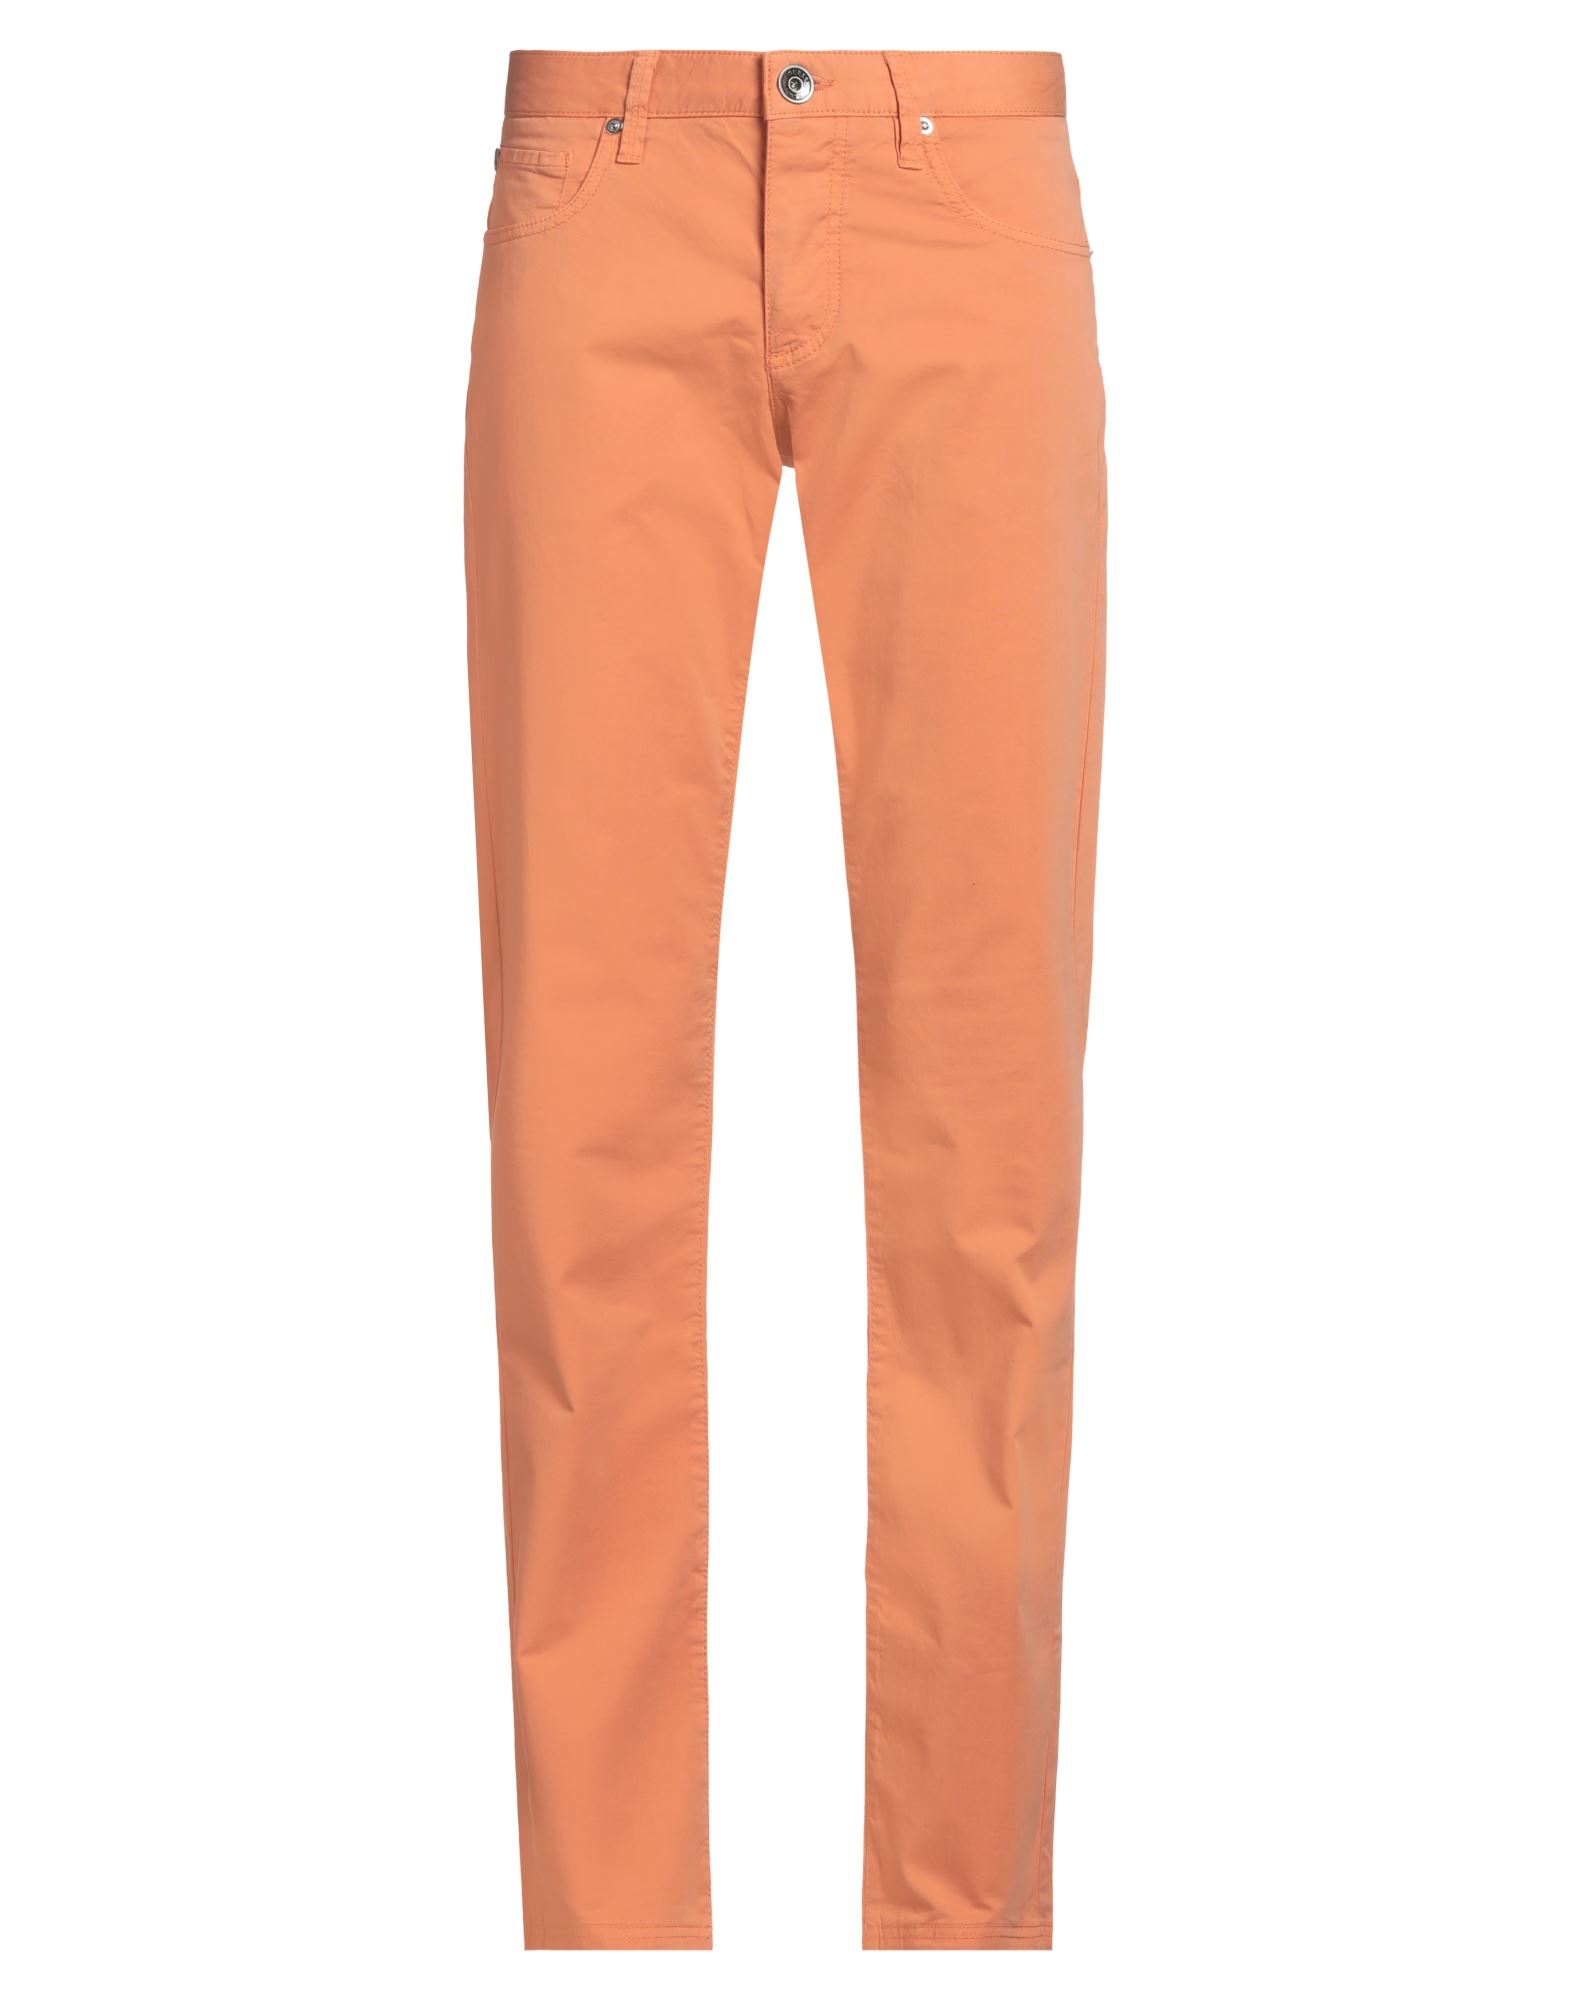 Marciano Pants In Orange